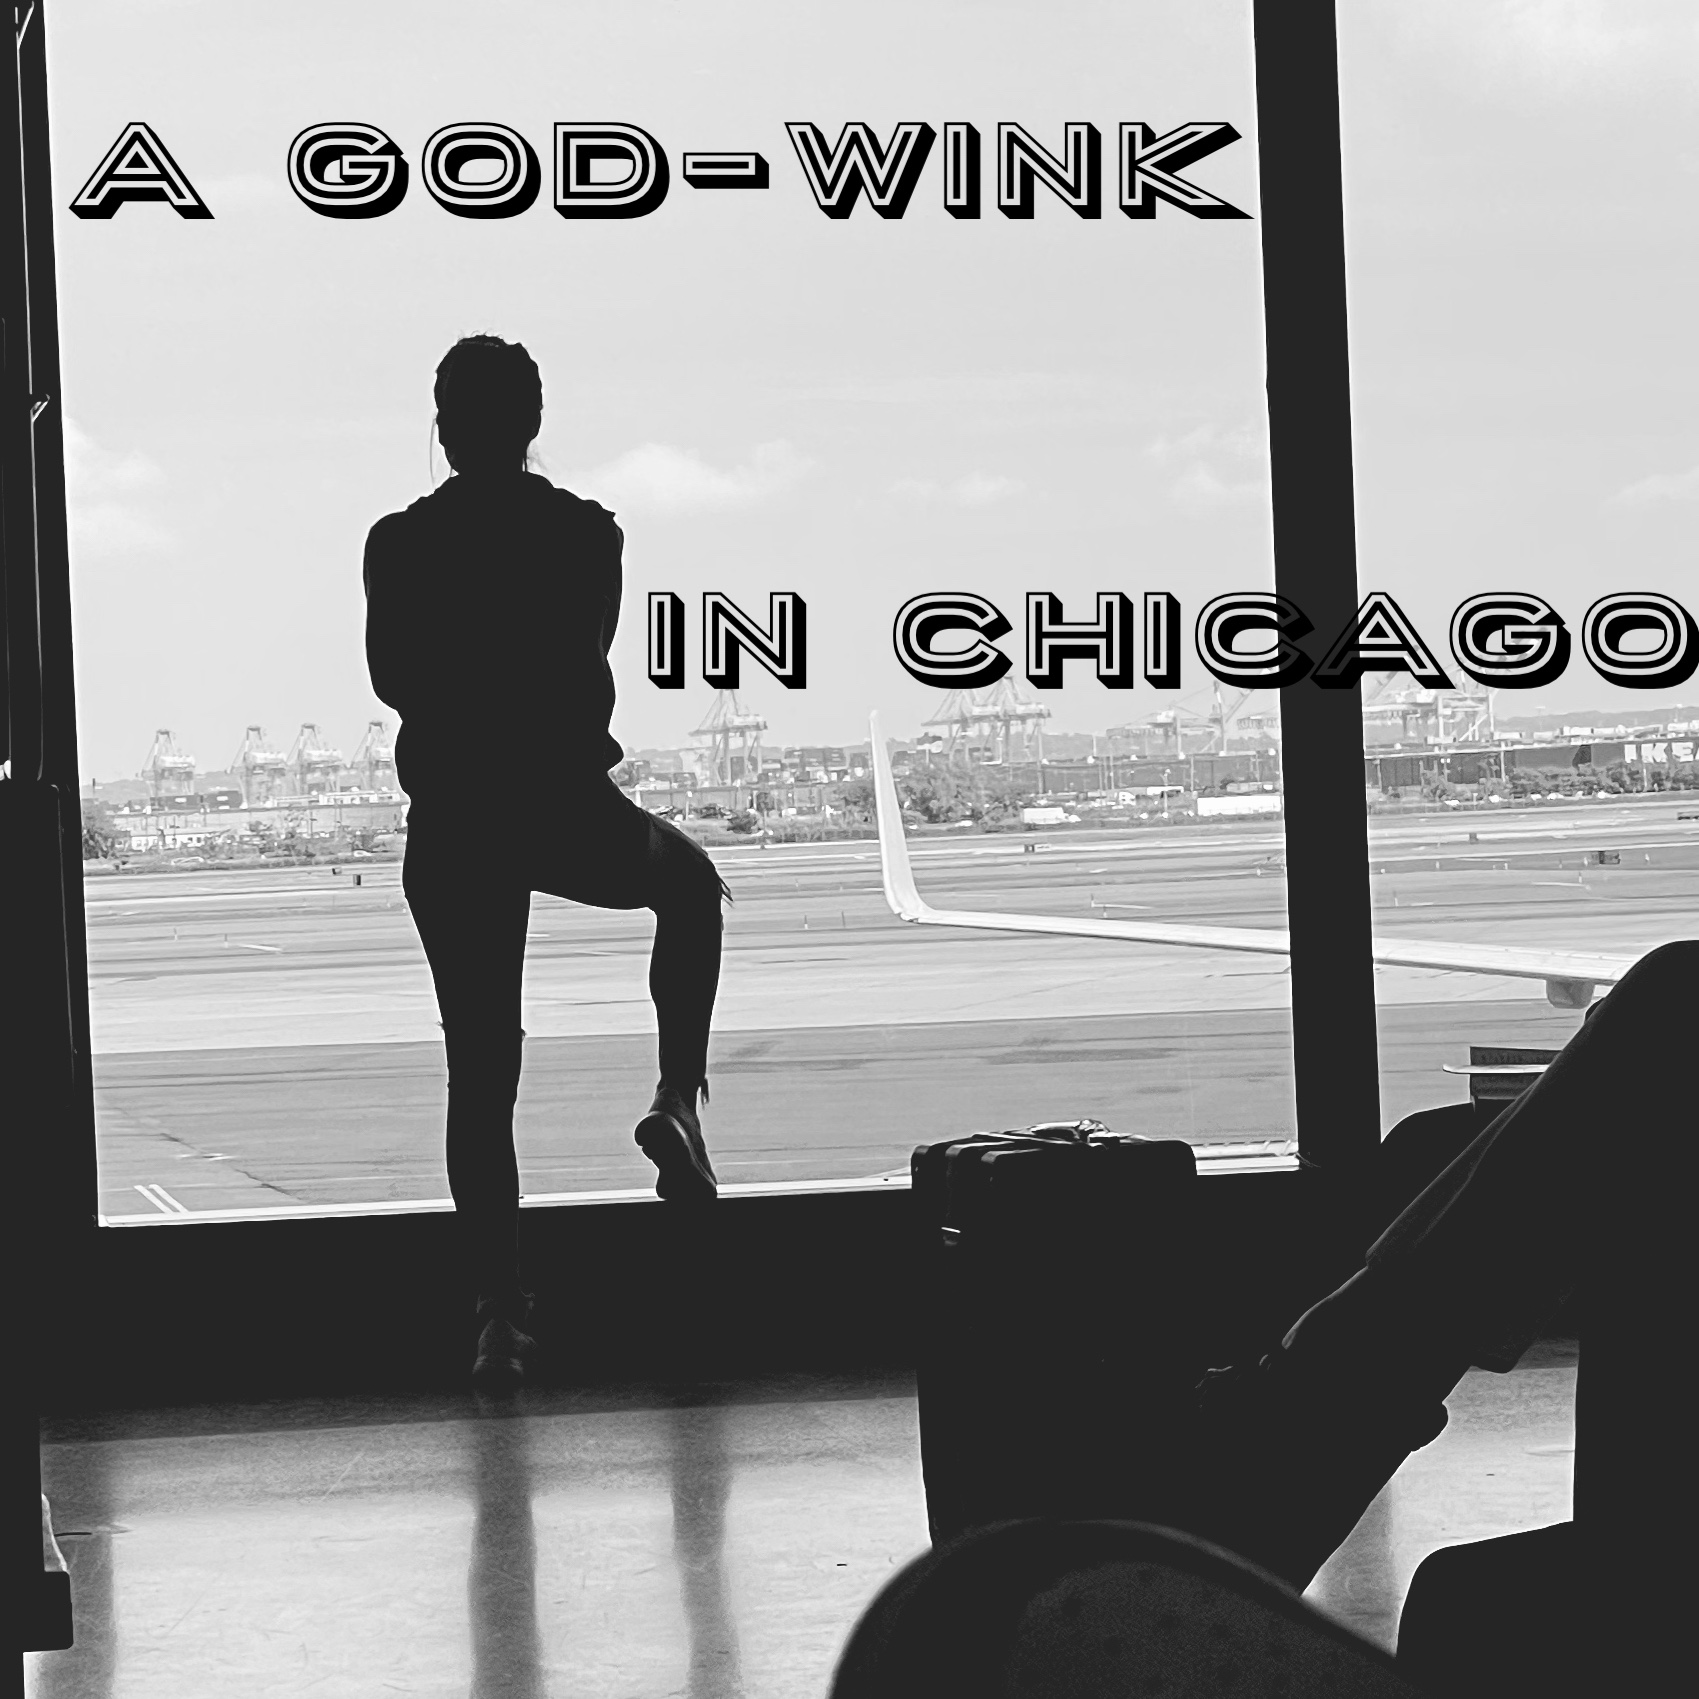 A God-Wink in Chicago